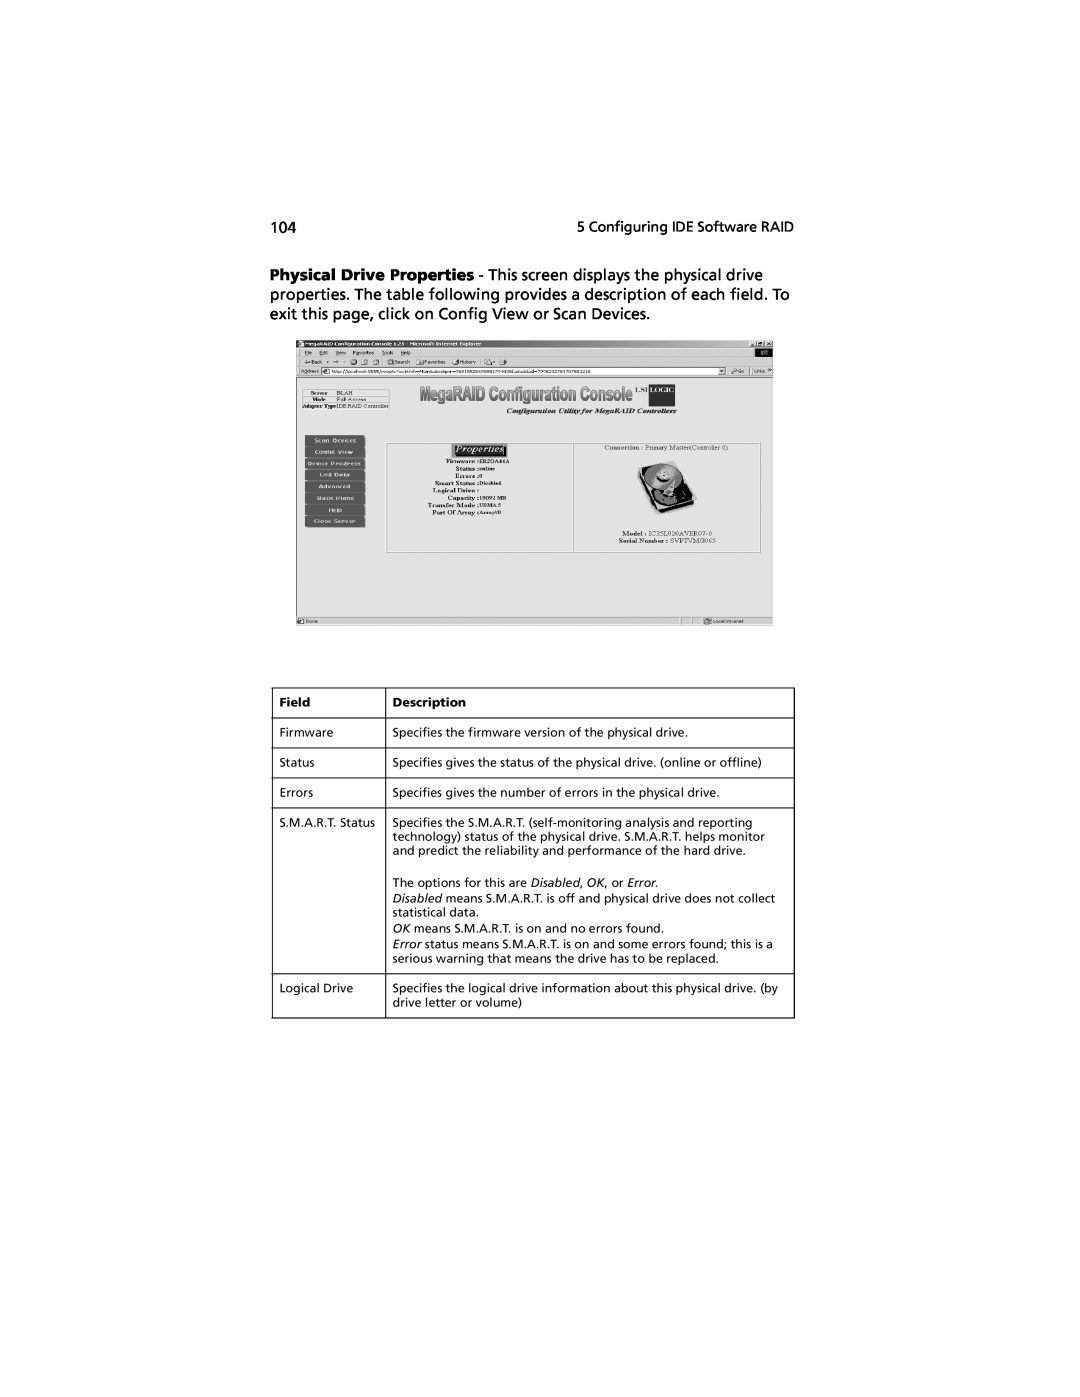 Acer G301 manual Field, Description, Firmware 